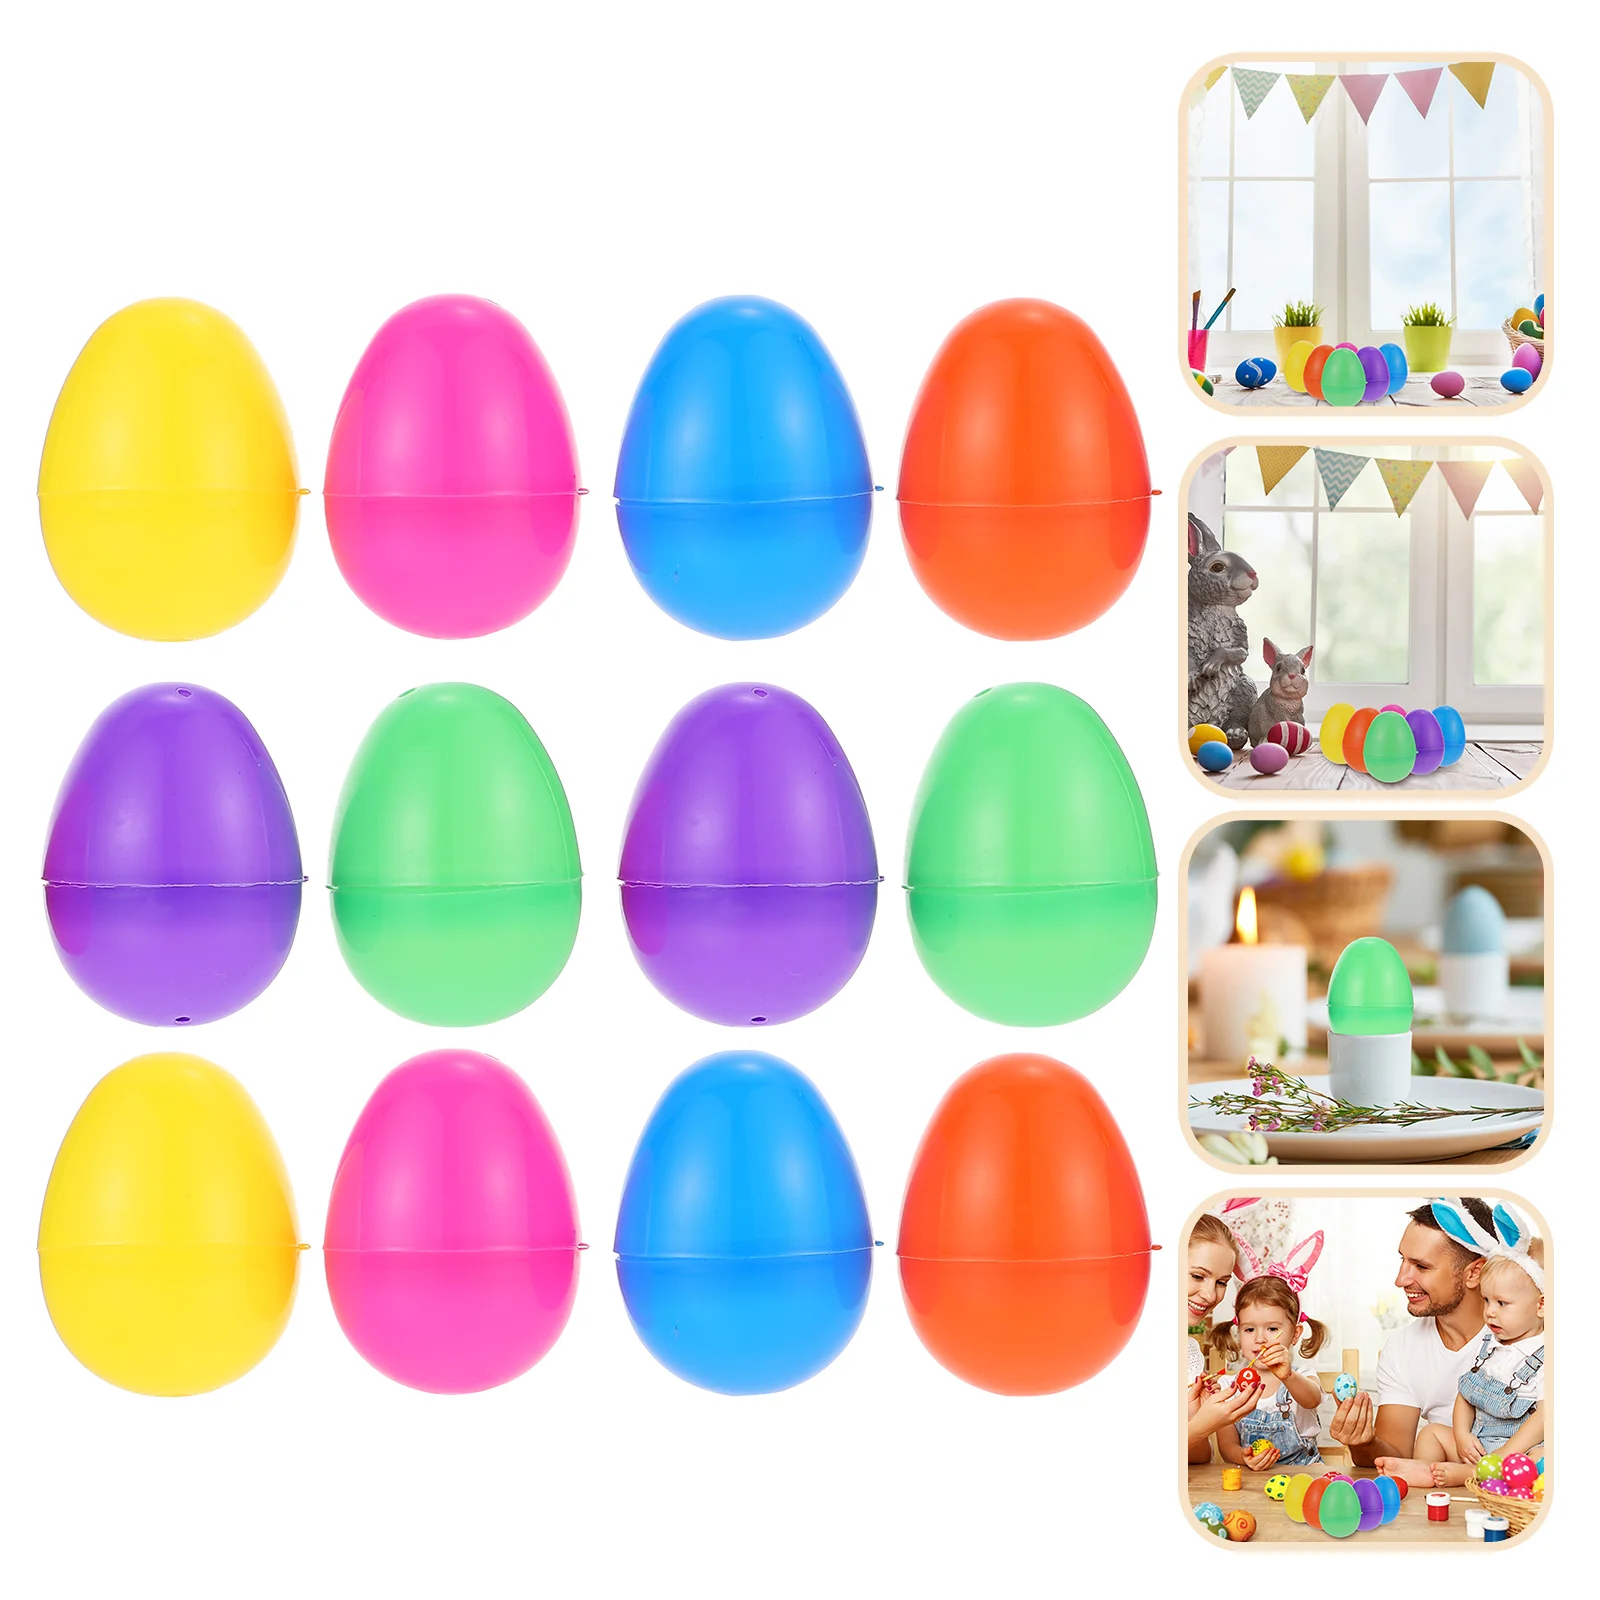 

12 Pcs Imitation Eggs Easter Party Favor Wedding Decor Creative Twisting Children Toys Lottery Plastic Children's